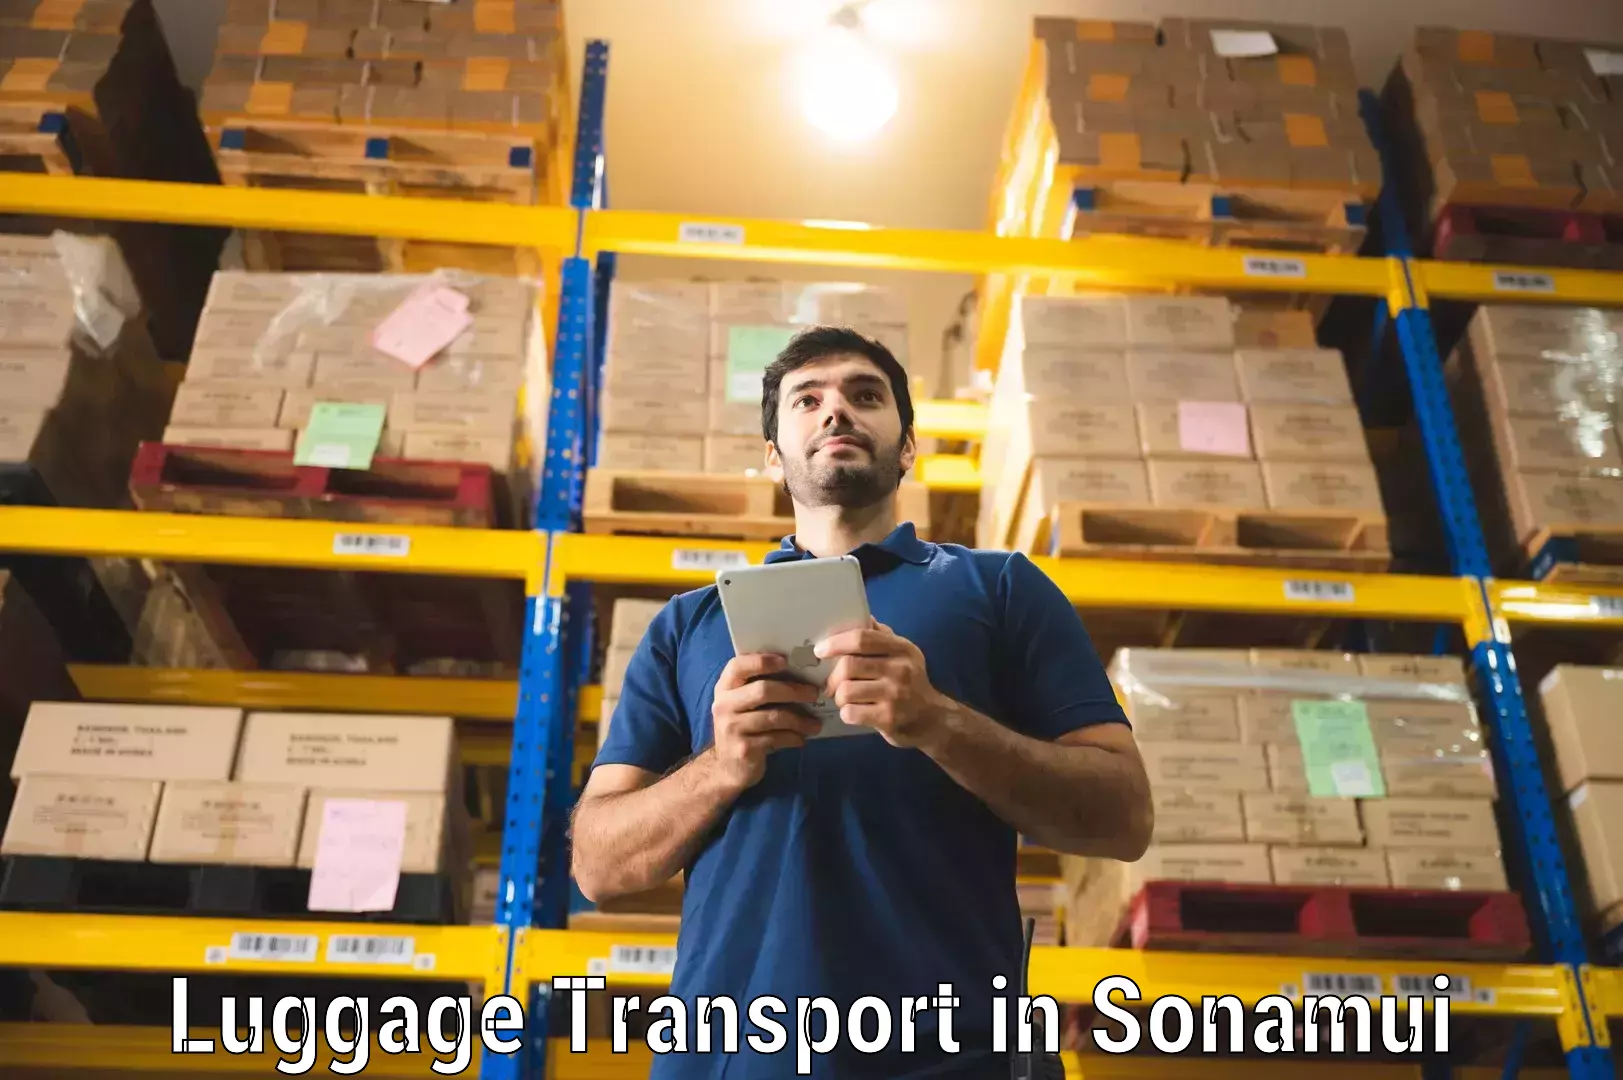 Discounted baggage transport in Sonamui